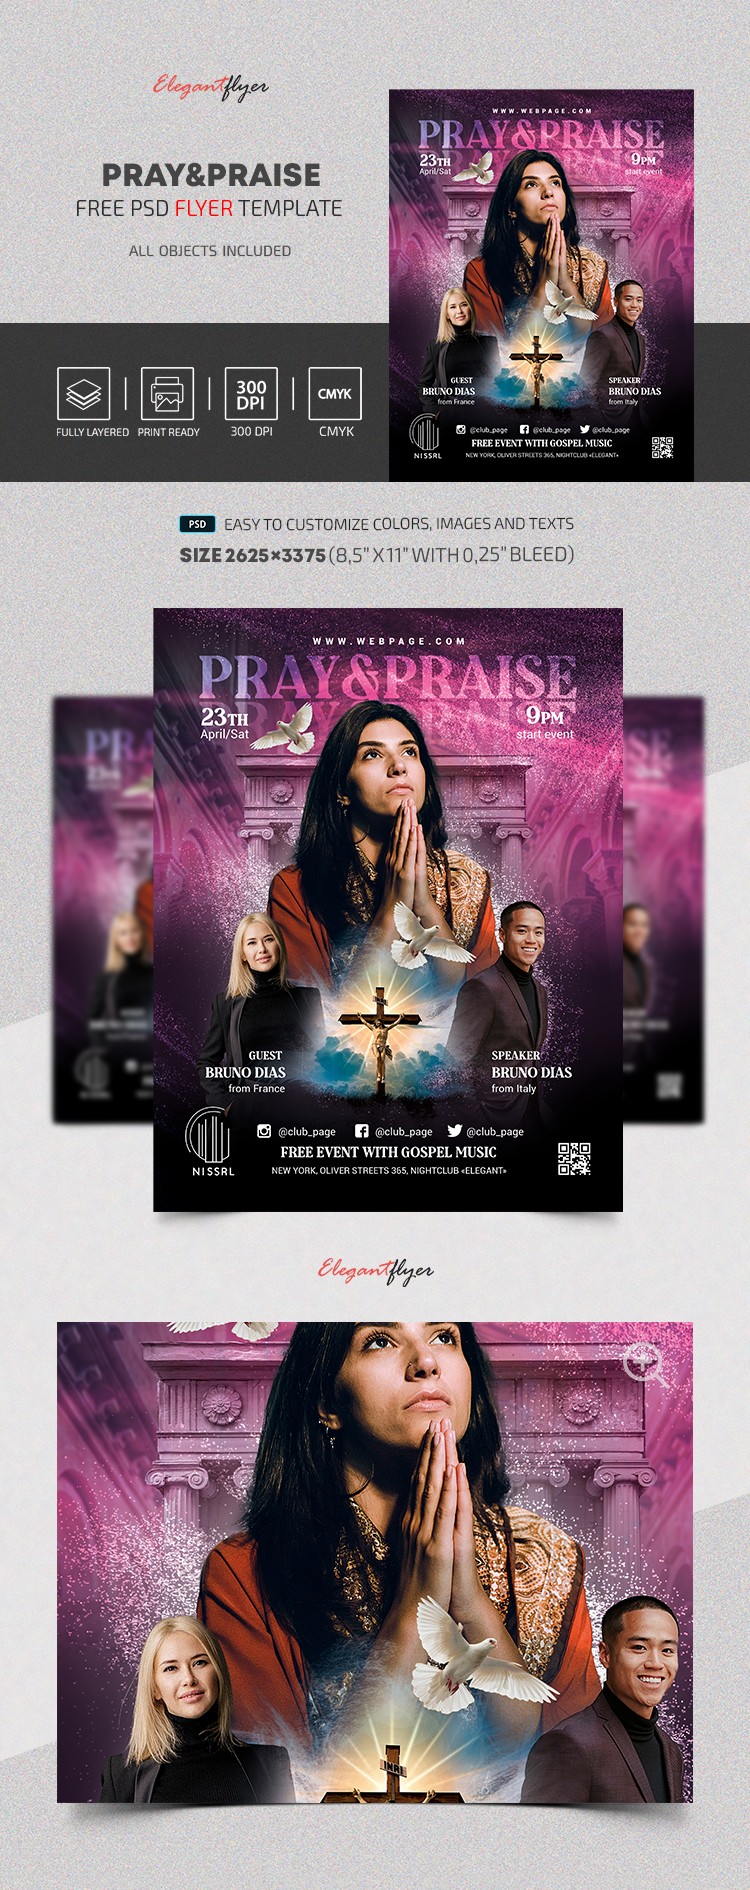 Pray & Praise - Free Flyer PSD Template by ElegantFlyer